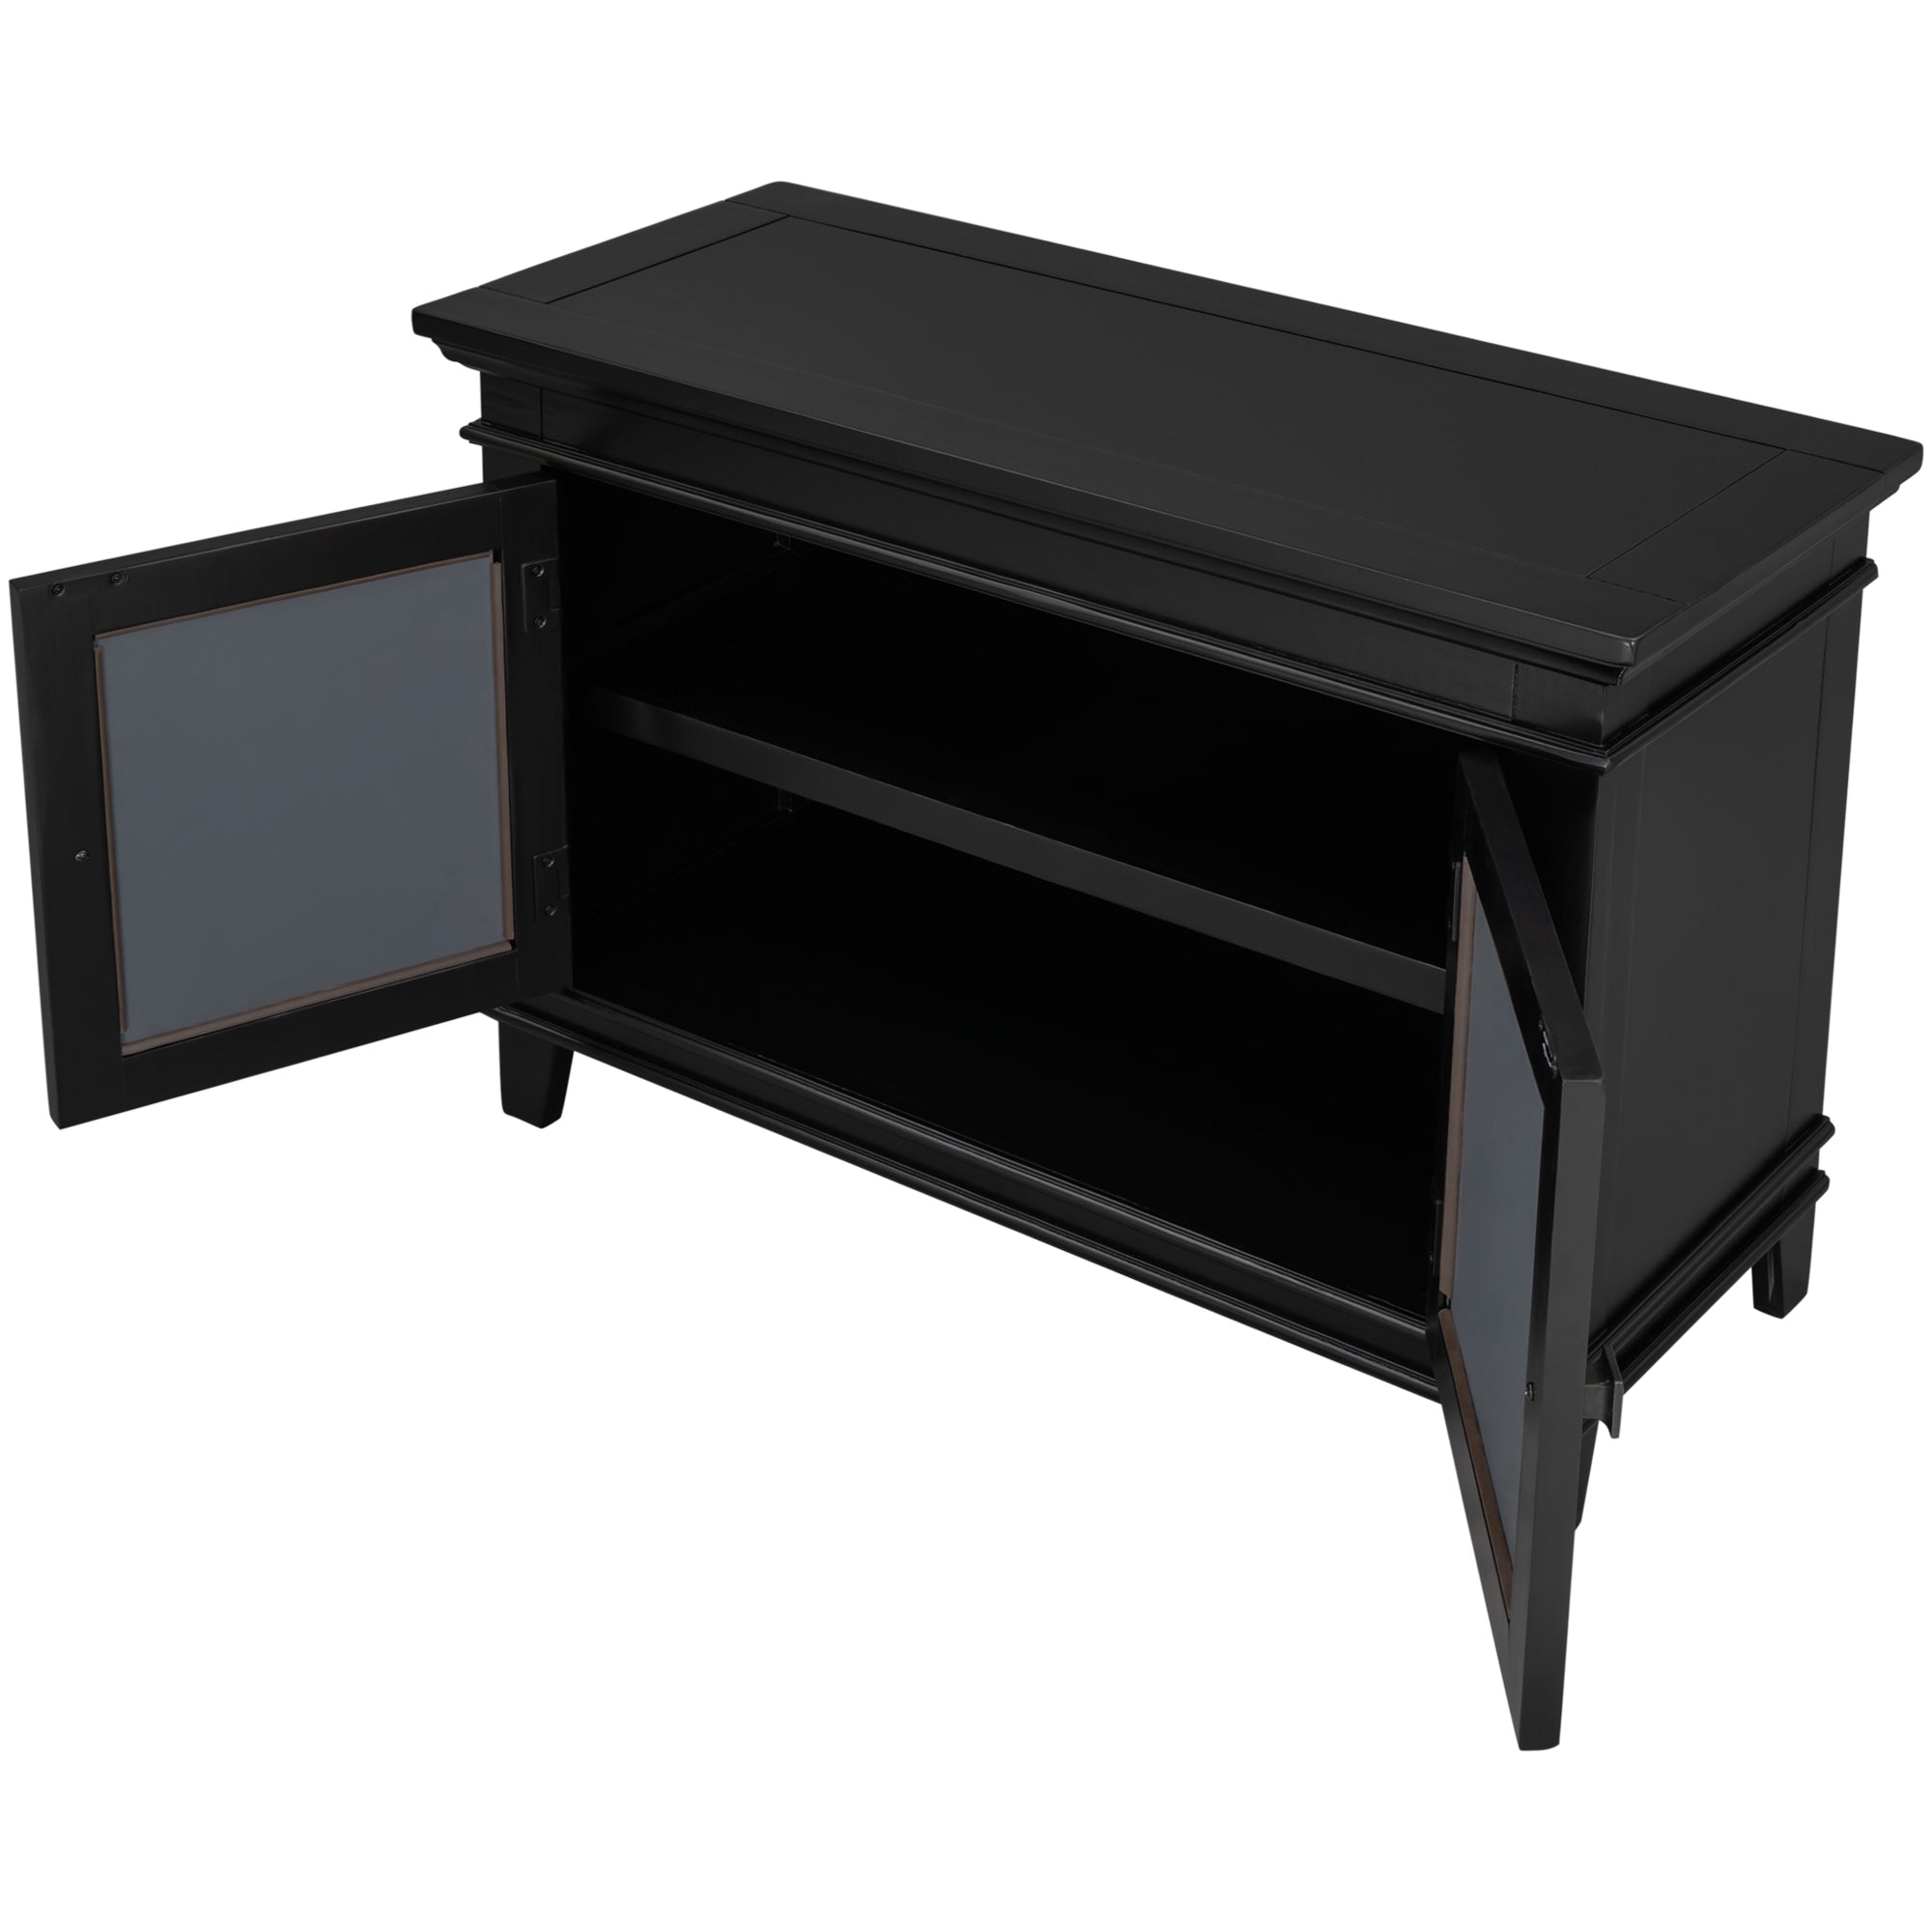 Accent Storage Cabinet Wooden Cabinet with Decorative Mirror Door (Black)